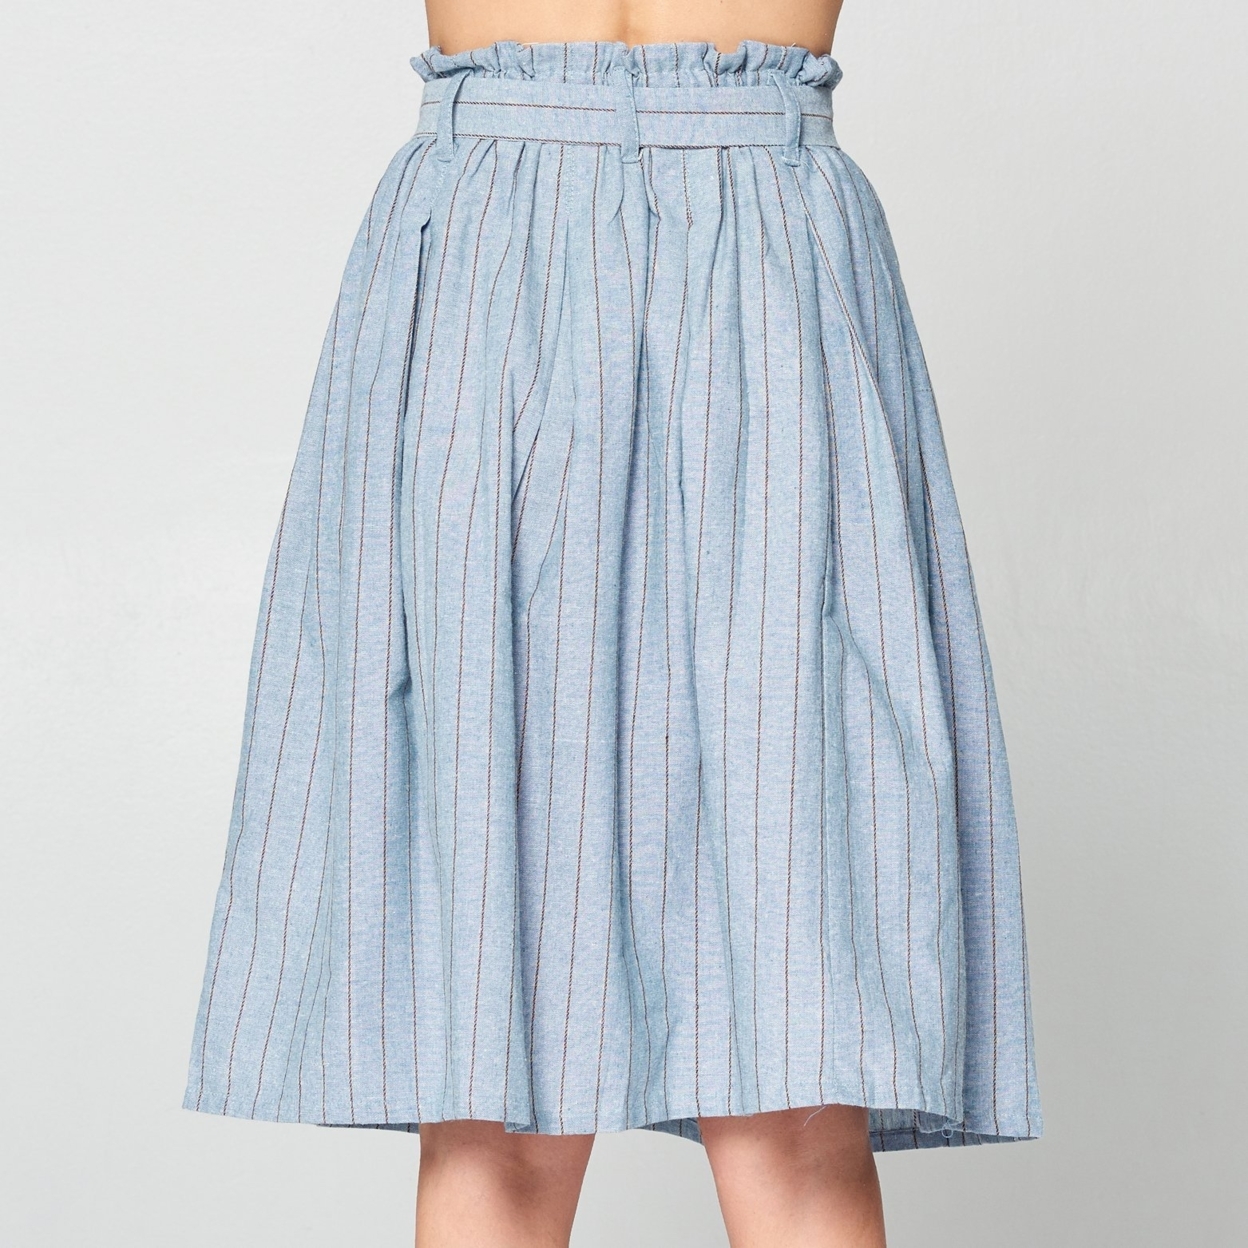 Denim Striped Cotton Skirt - Light Denim, Small (2-6)